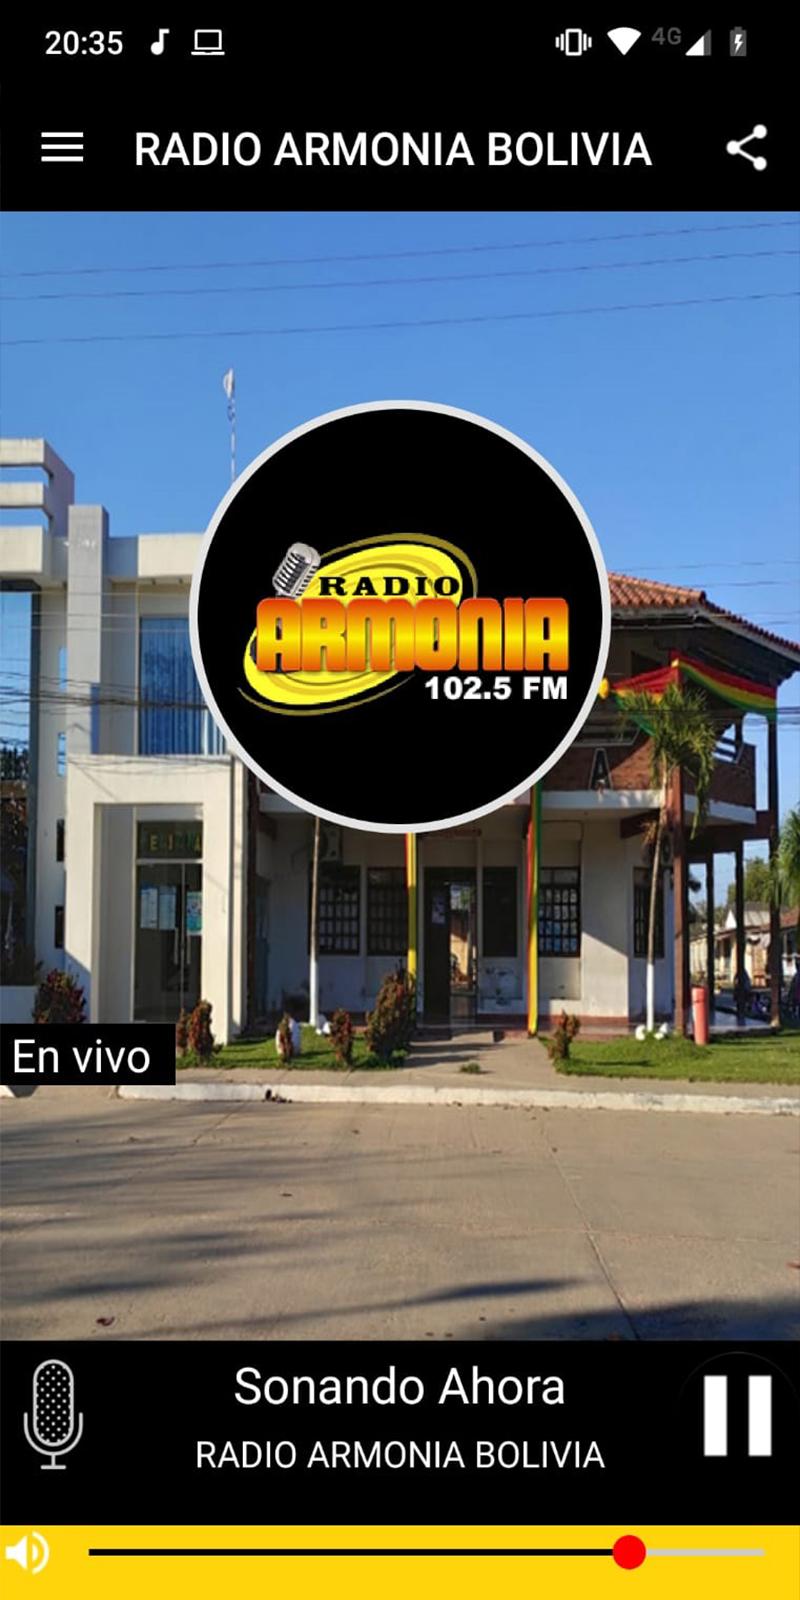 Radio Armonia Santa Cruz Bolivia for Android - APK Download